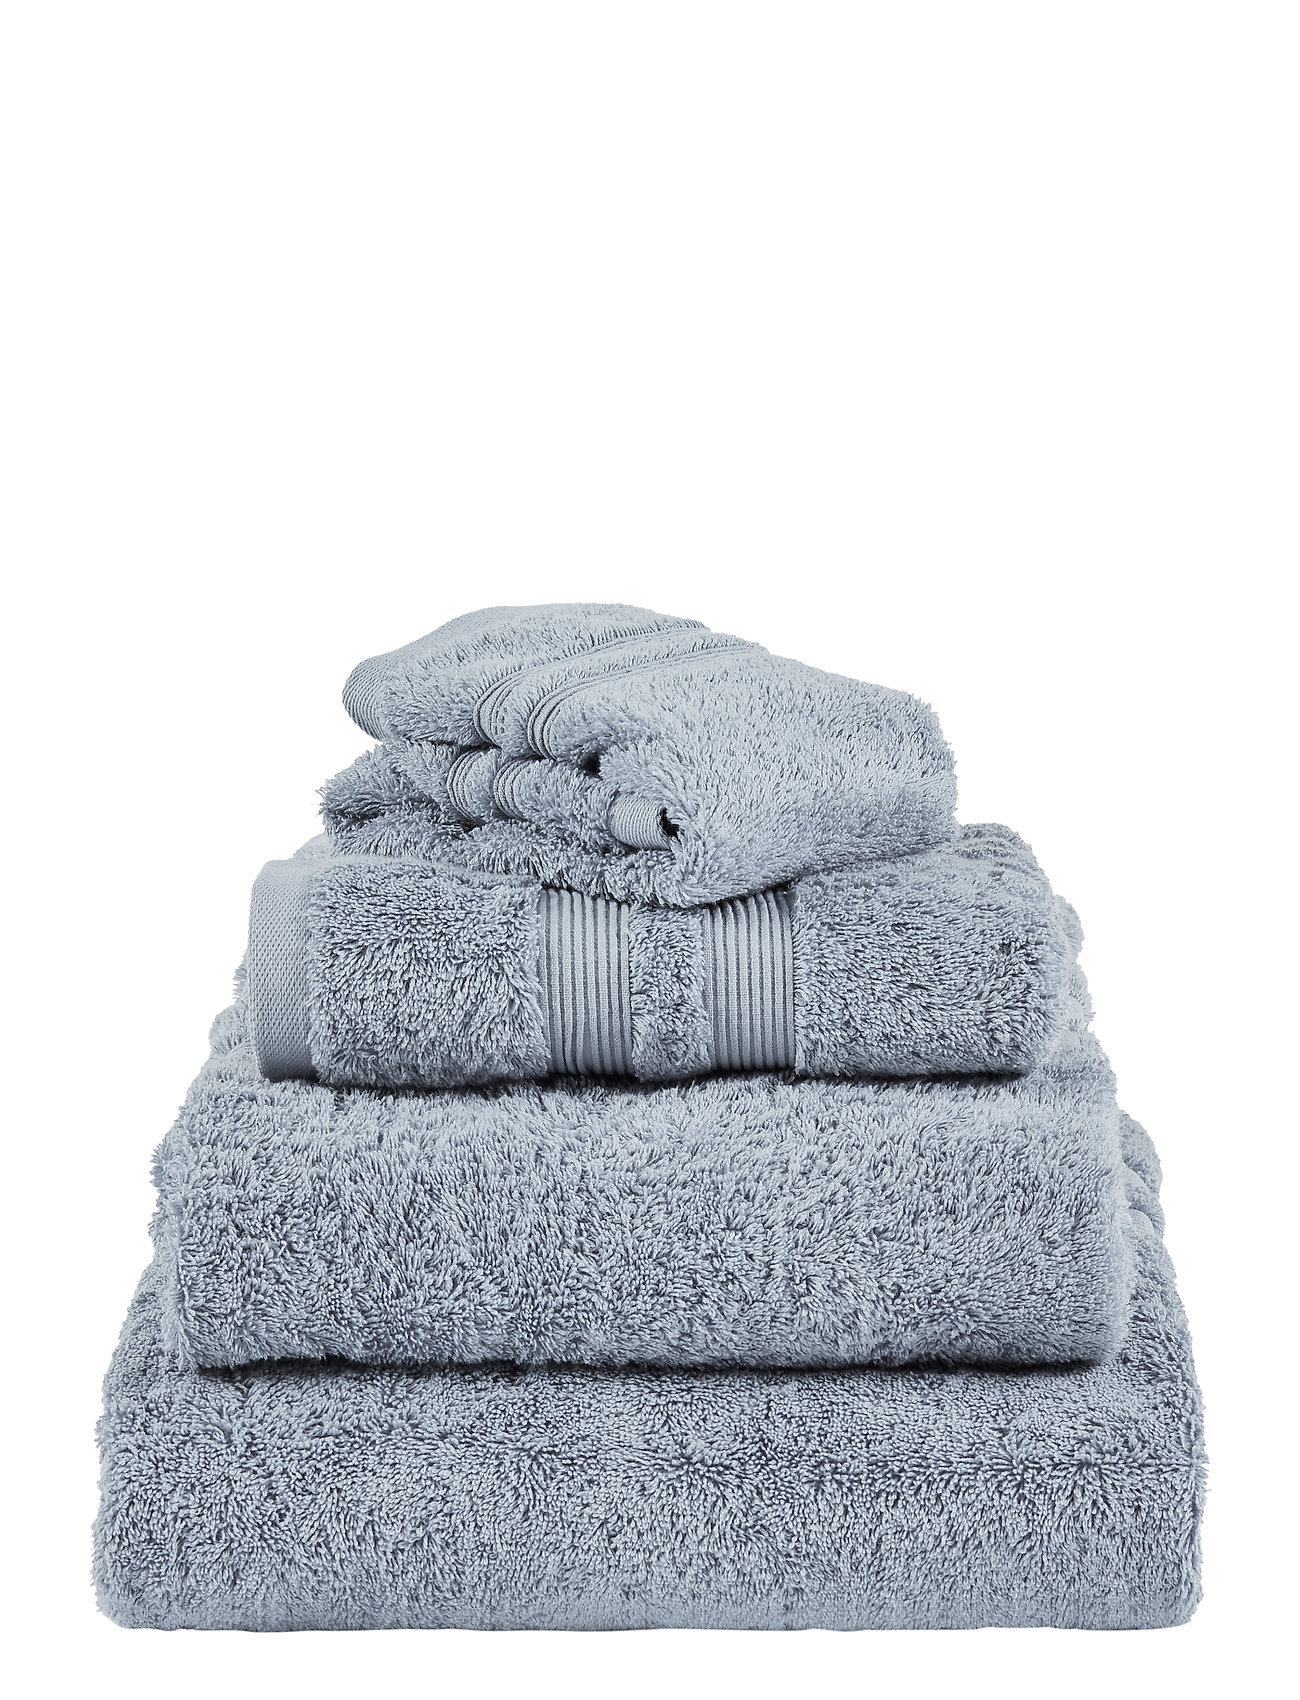 Fontana Towel Organic Home Textiles Bathroom Textiles Towels Blue Mille Notti